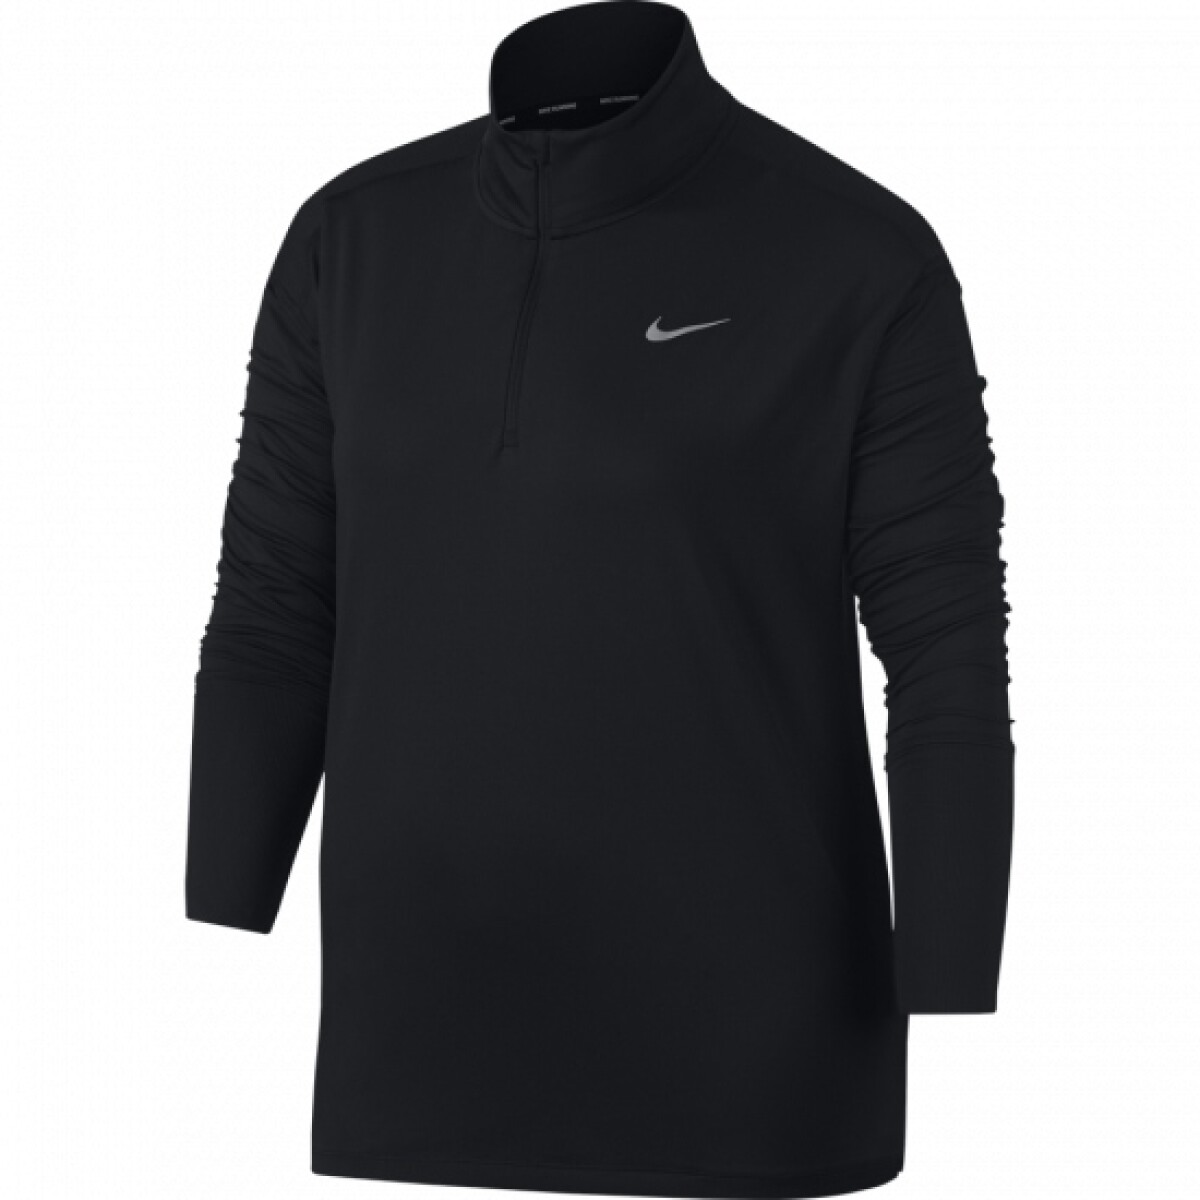 Buzo Nike Running Dama Elmnt Top Hz Negro Reflective Silv - Color Único 